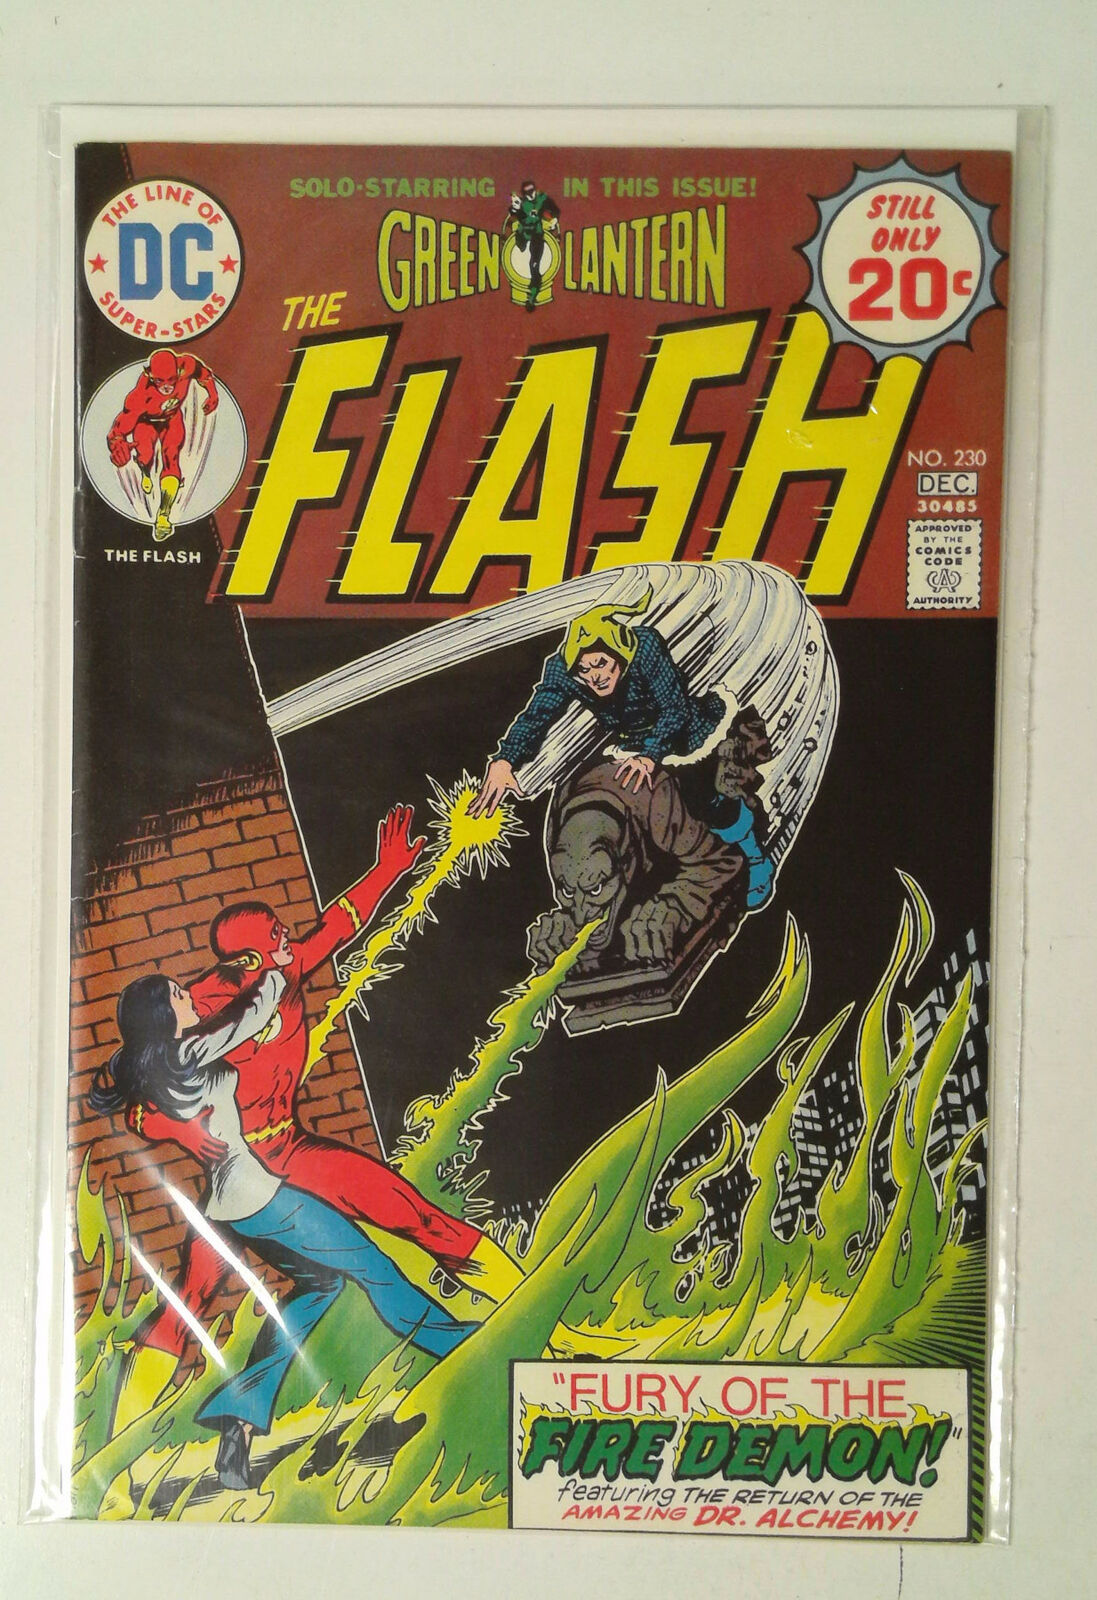 The Flash #230 DC Comics (1974) VF 1st Print Comic Book